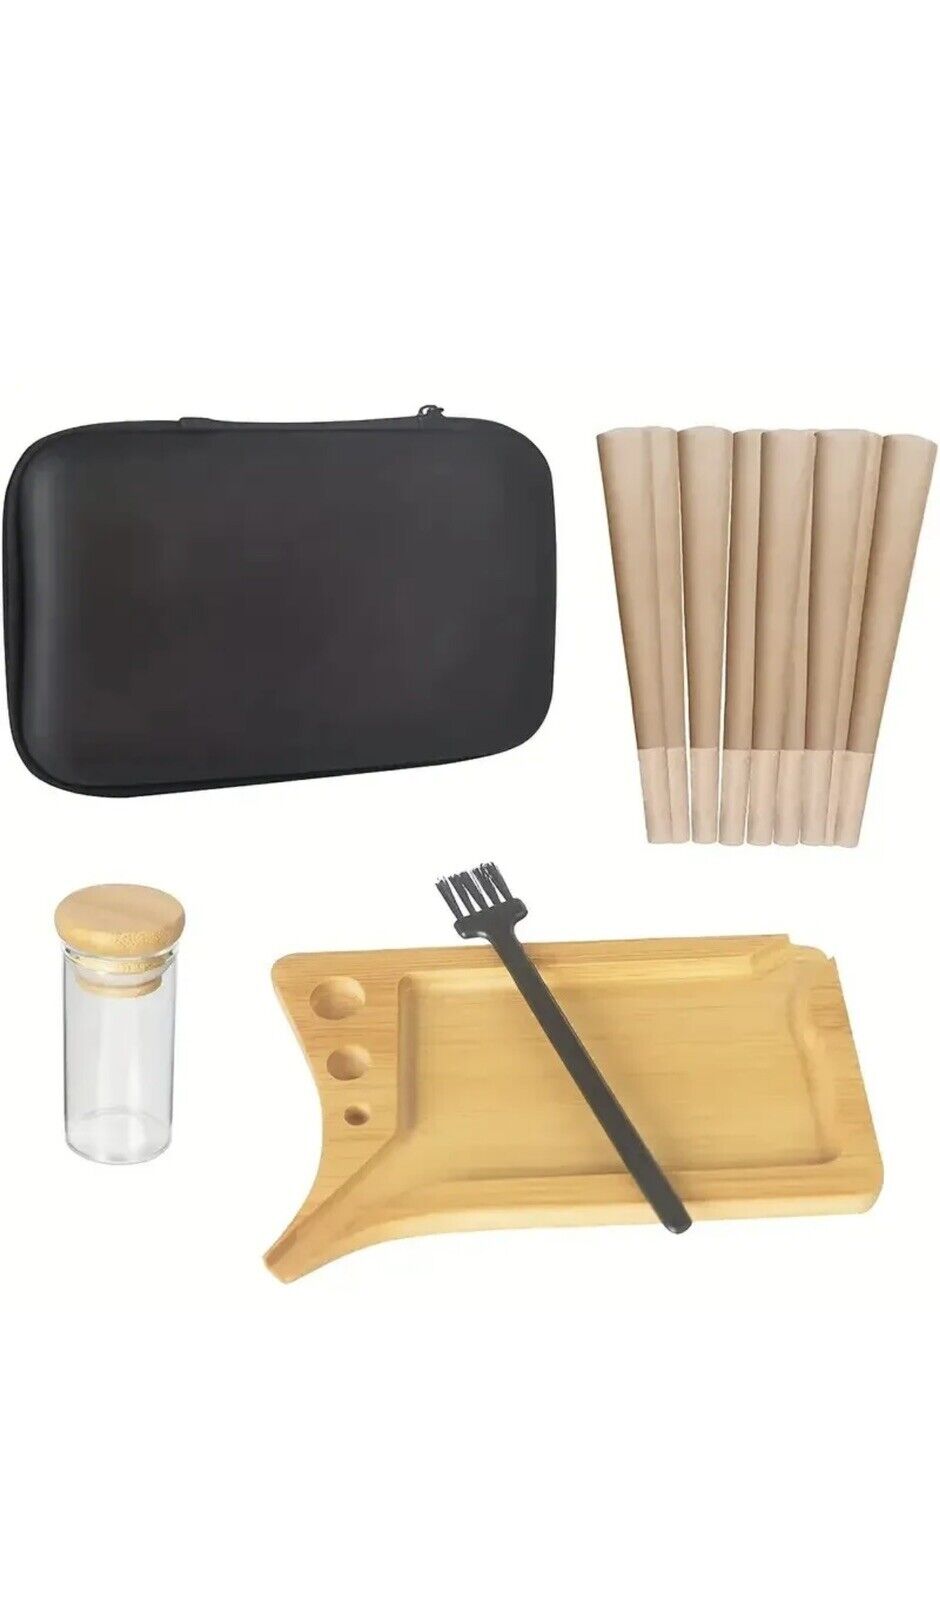 Sudzik Group High Quality Wooden Smoking Accessories Smoker\'s Kit Multi Tools